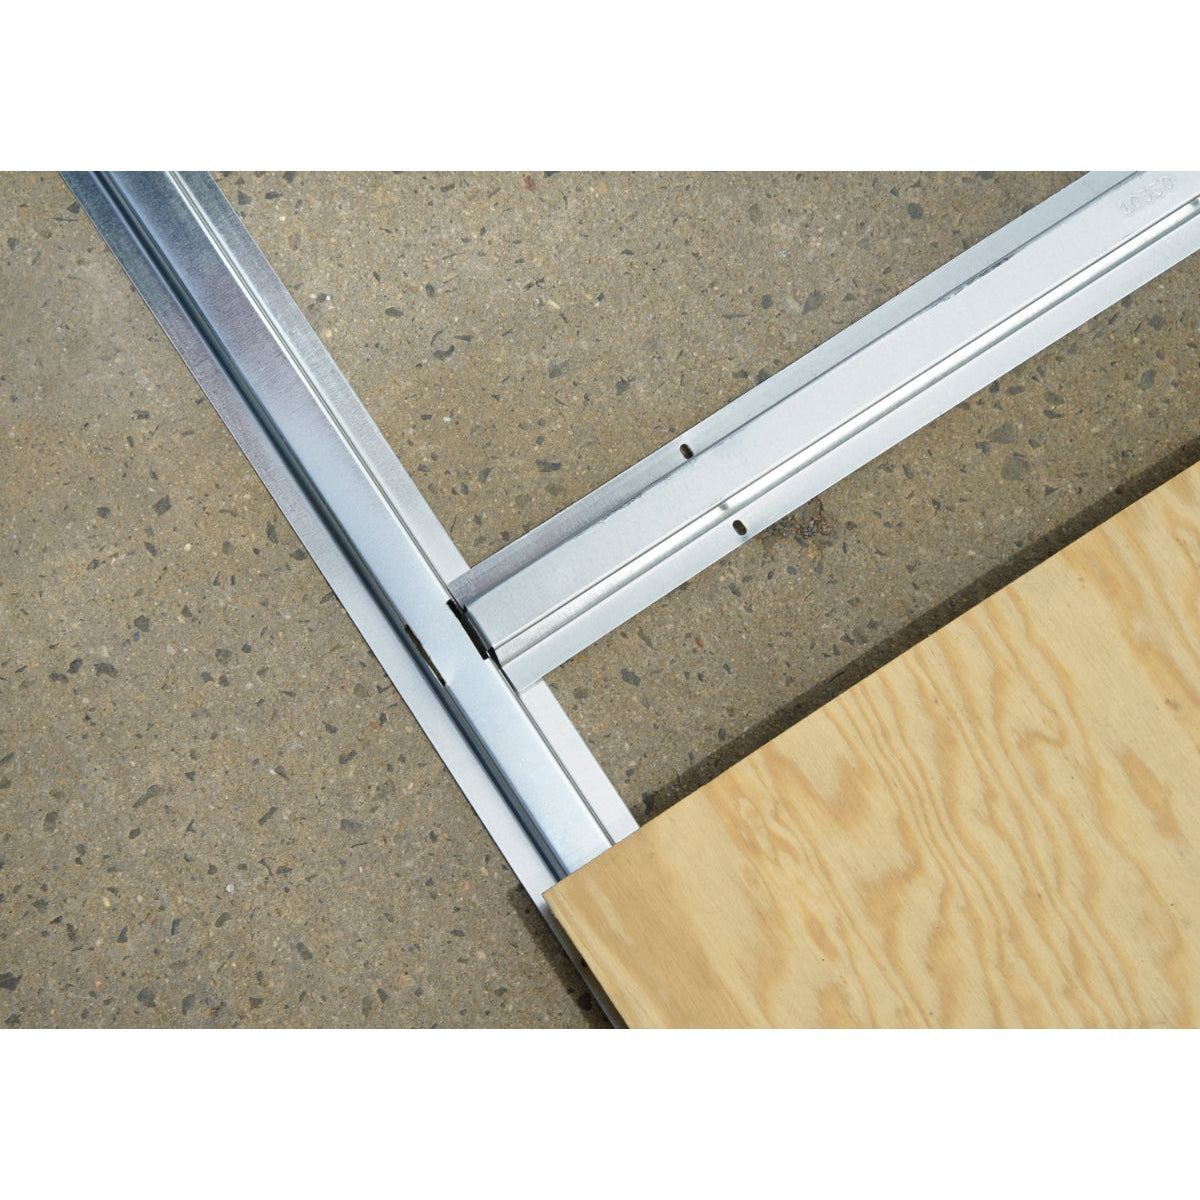 Floor Frame Kit for Arrow Yardsaver Sheds 4x7 and 4x10 ft.-Delightful Yard